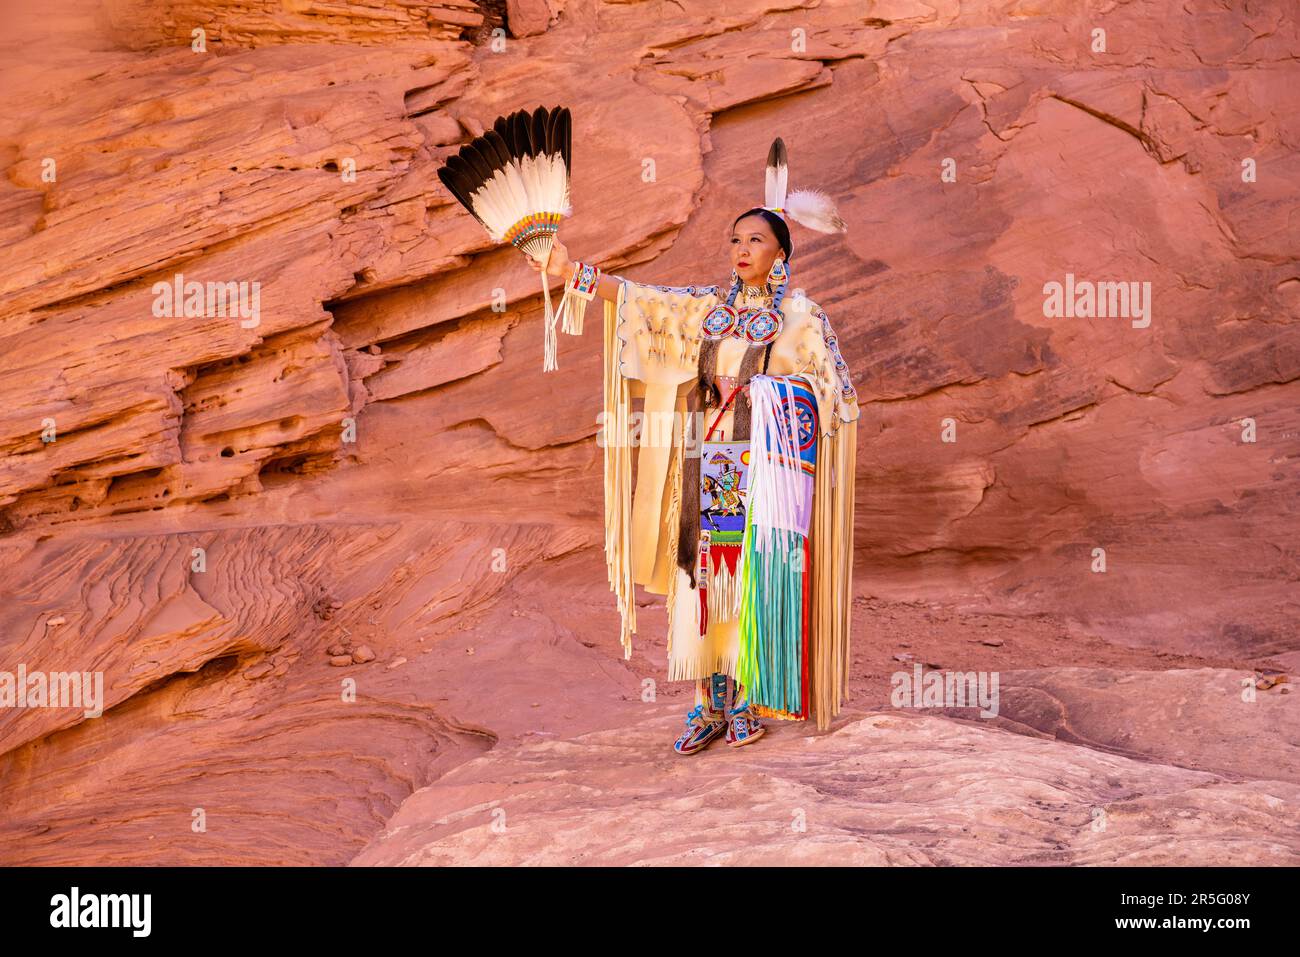 Donna americana indiana Navajo al Honeymoon Arch nella Mystery Valley della Monument Valley Navajo Tribal Park, Arizona, Stati Uniti Foto Stock